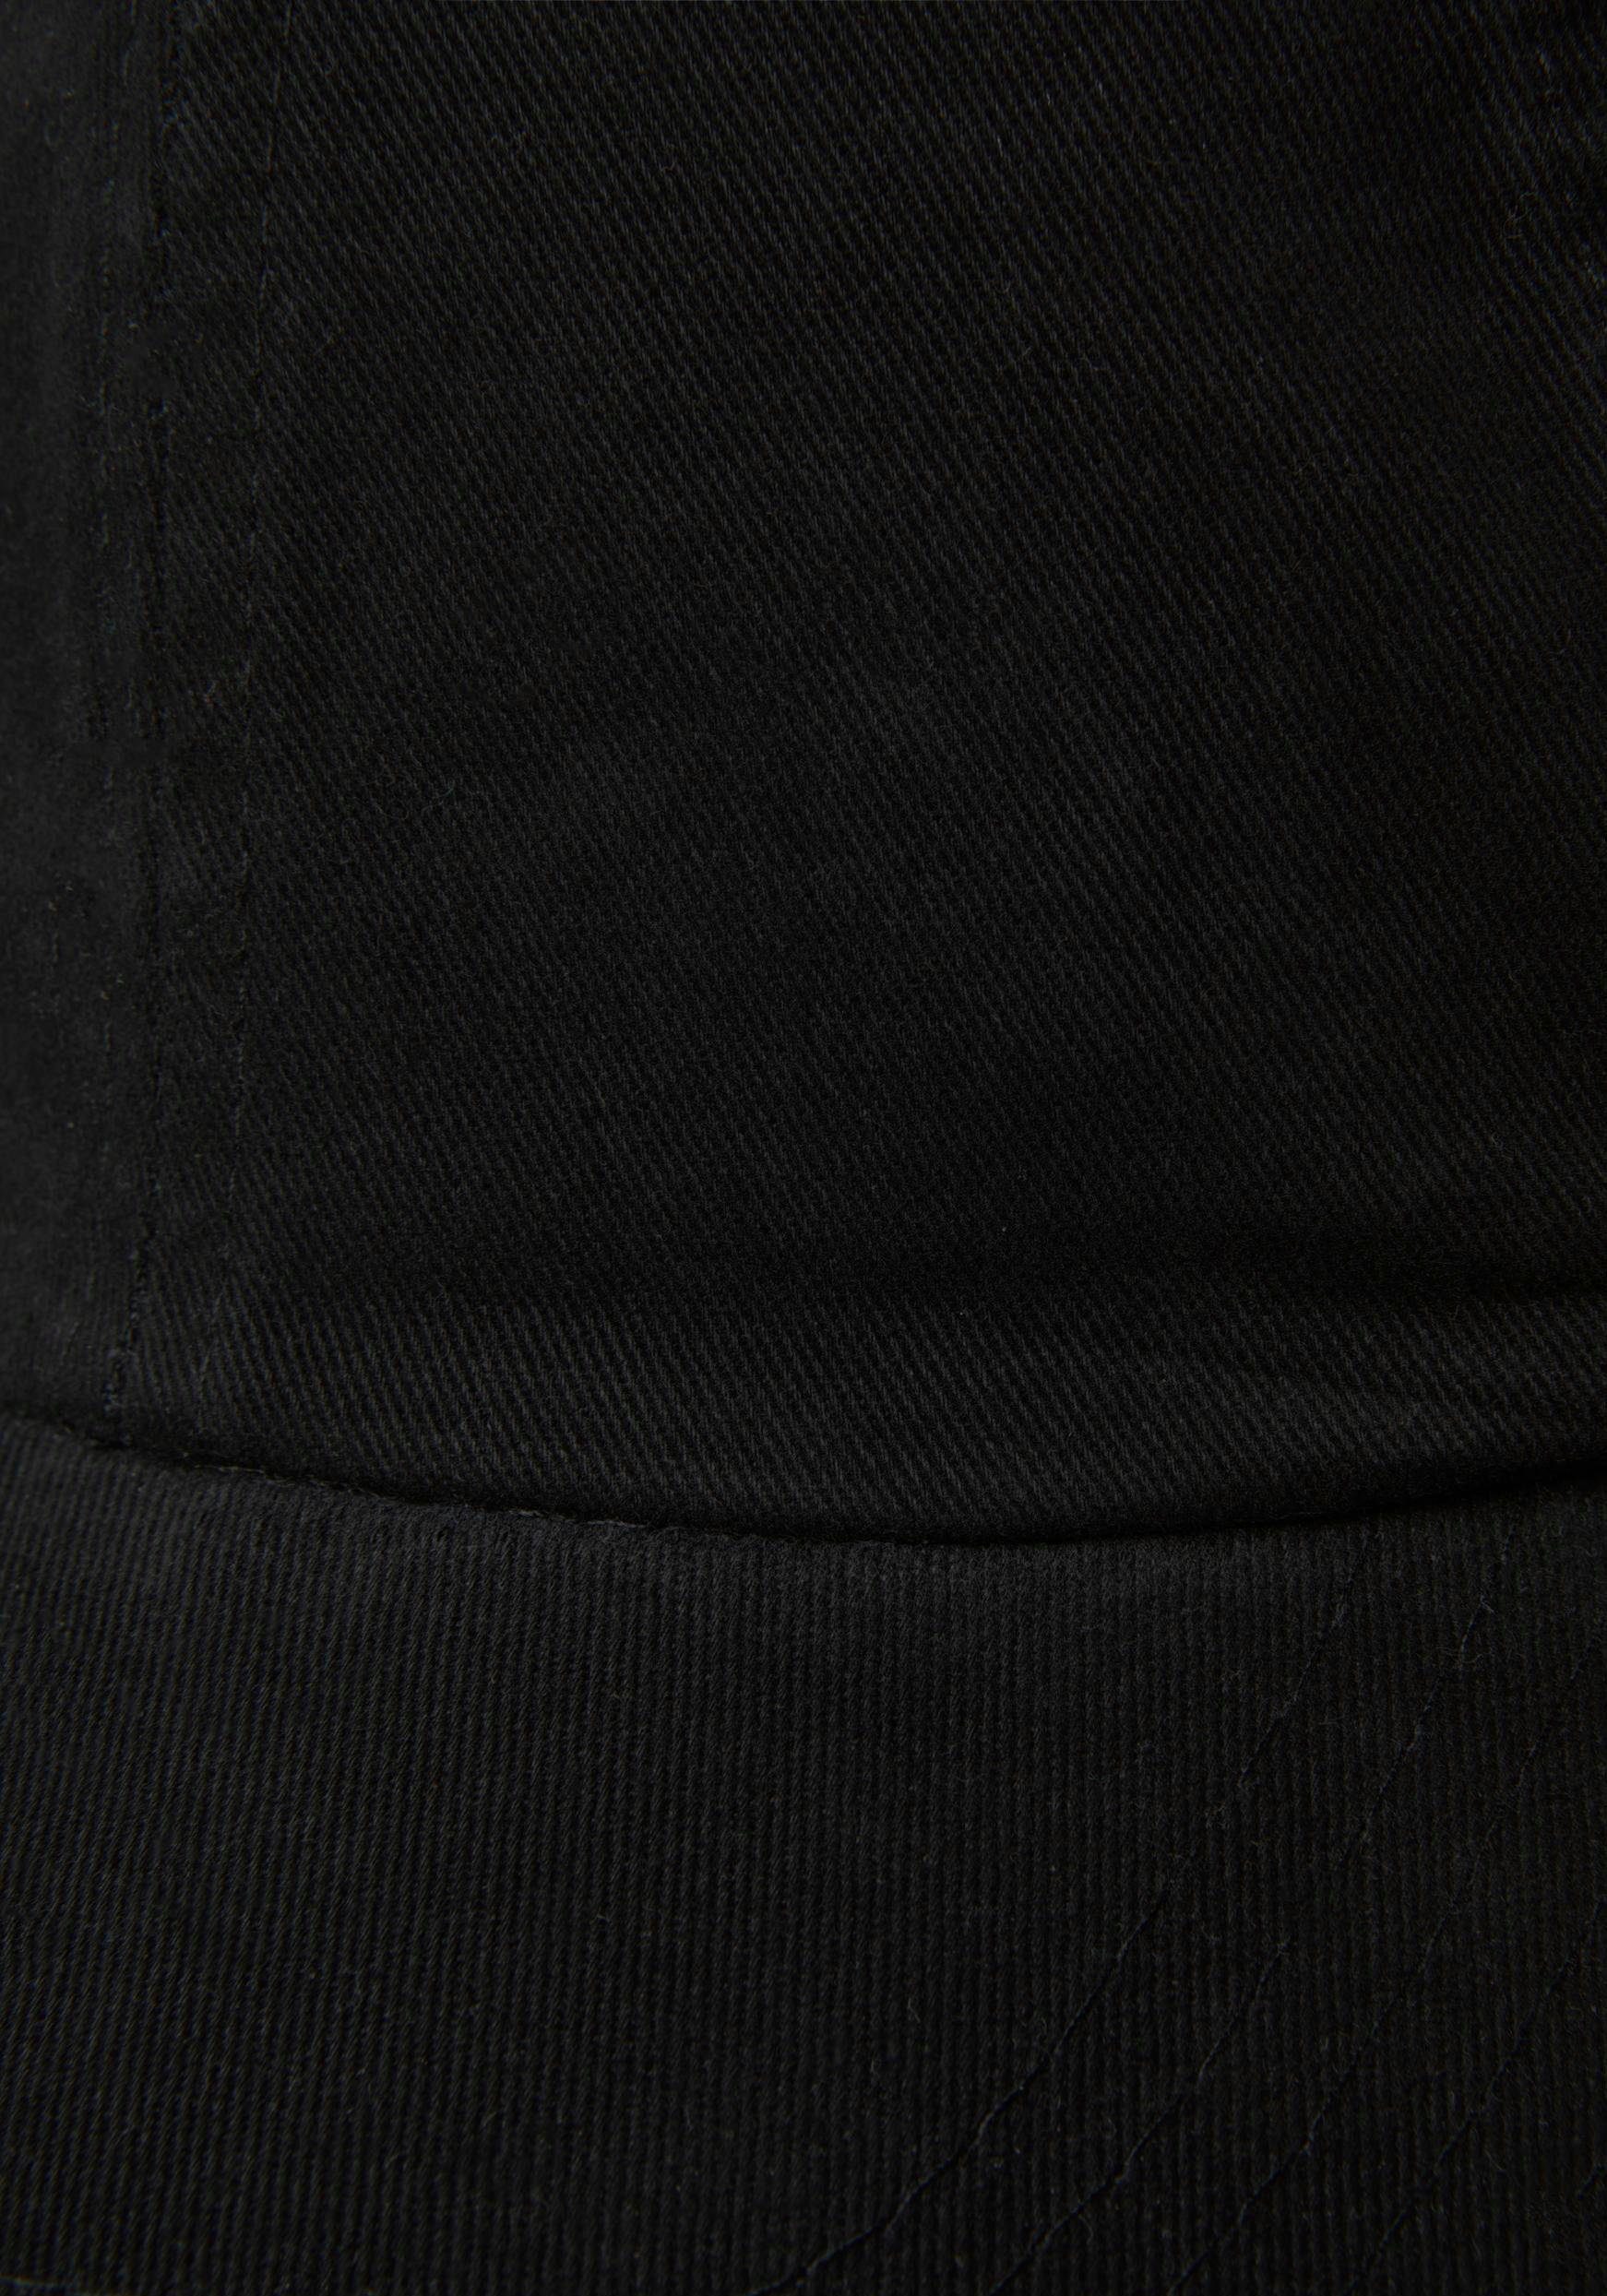 Jack Cap JACBRINK black & Jones Baseball CAP